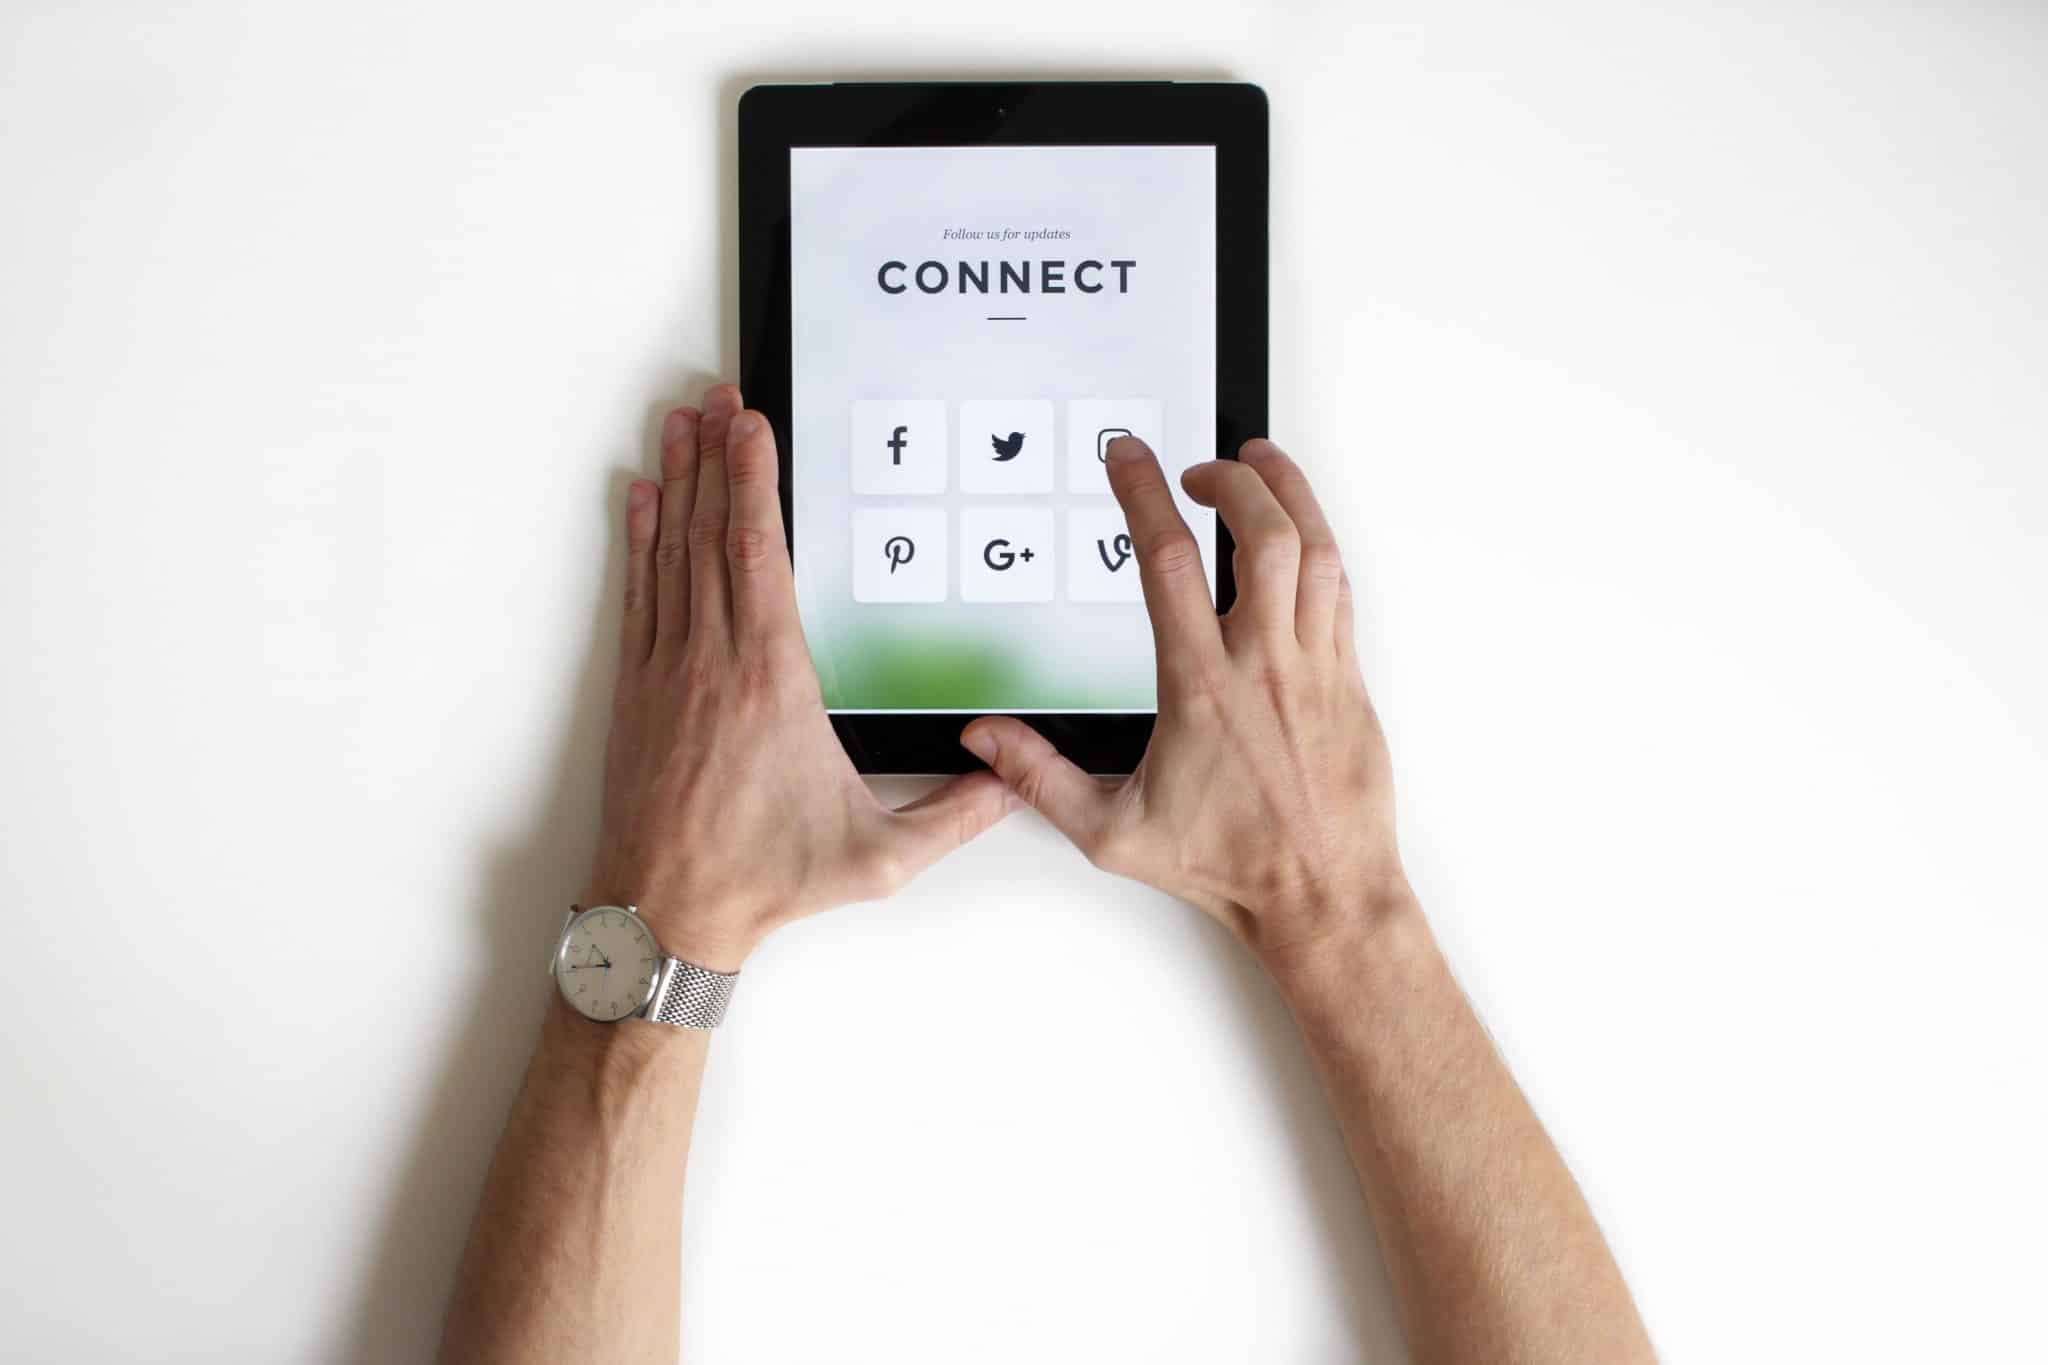 iPad with social media platforms